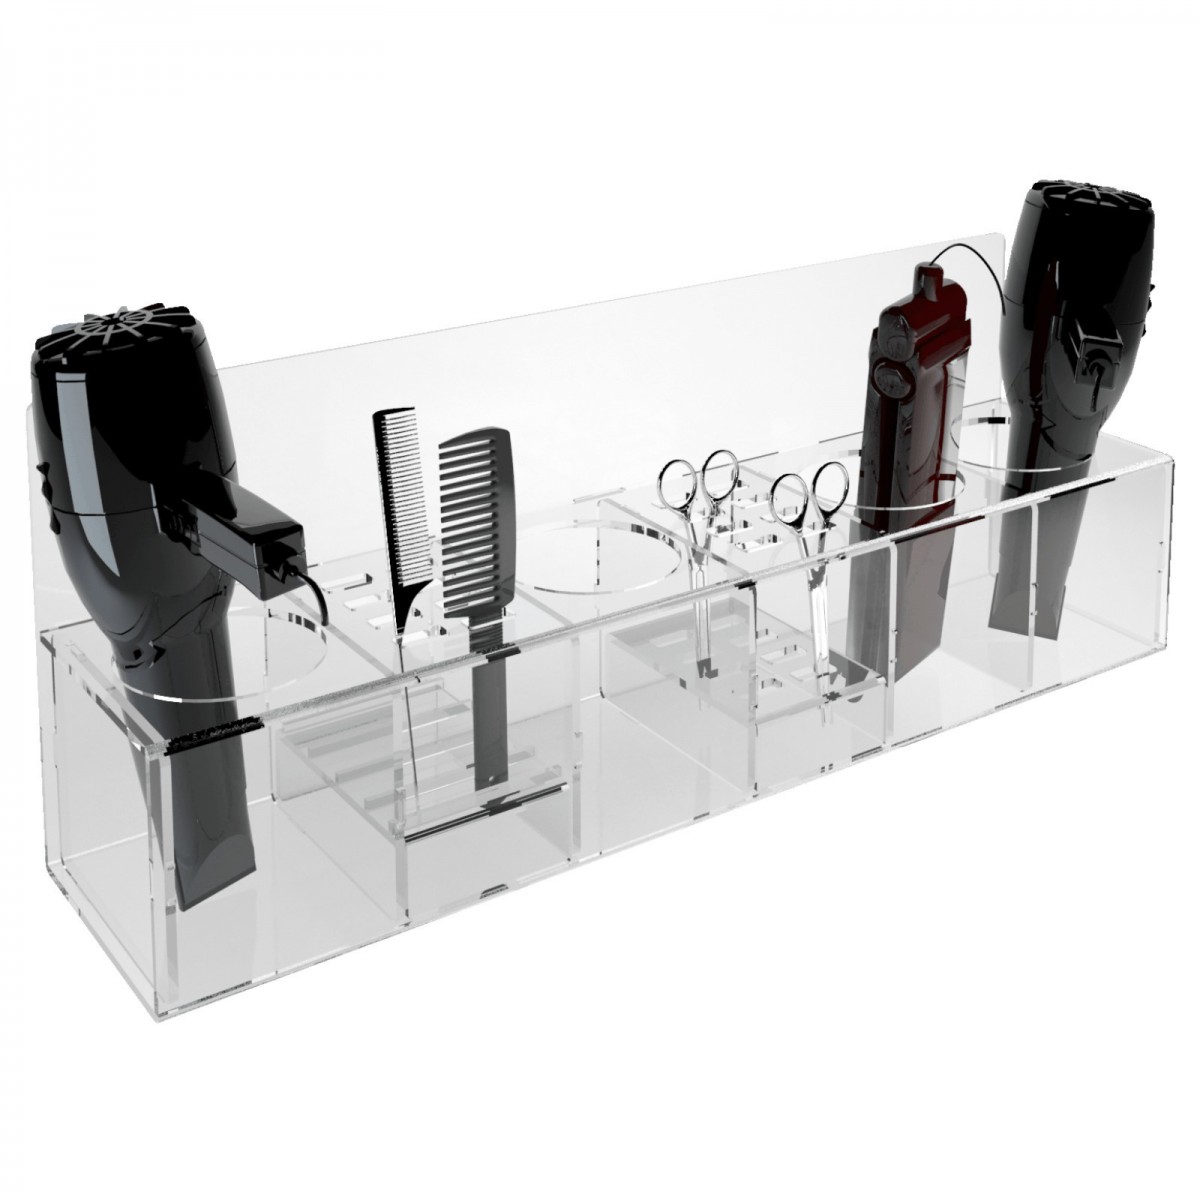 E-257 PAP - Porta attrezzi per parrucchiere in plexiglass trasparente - Misure 56x13x H 20